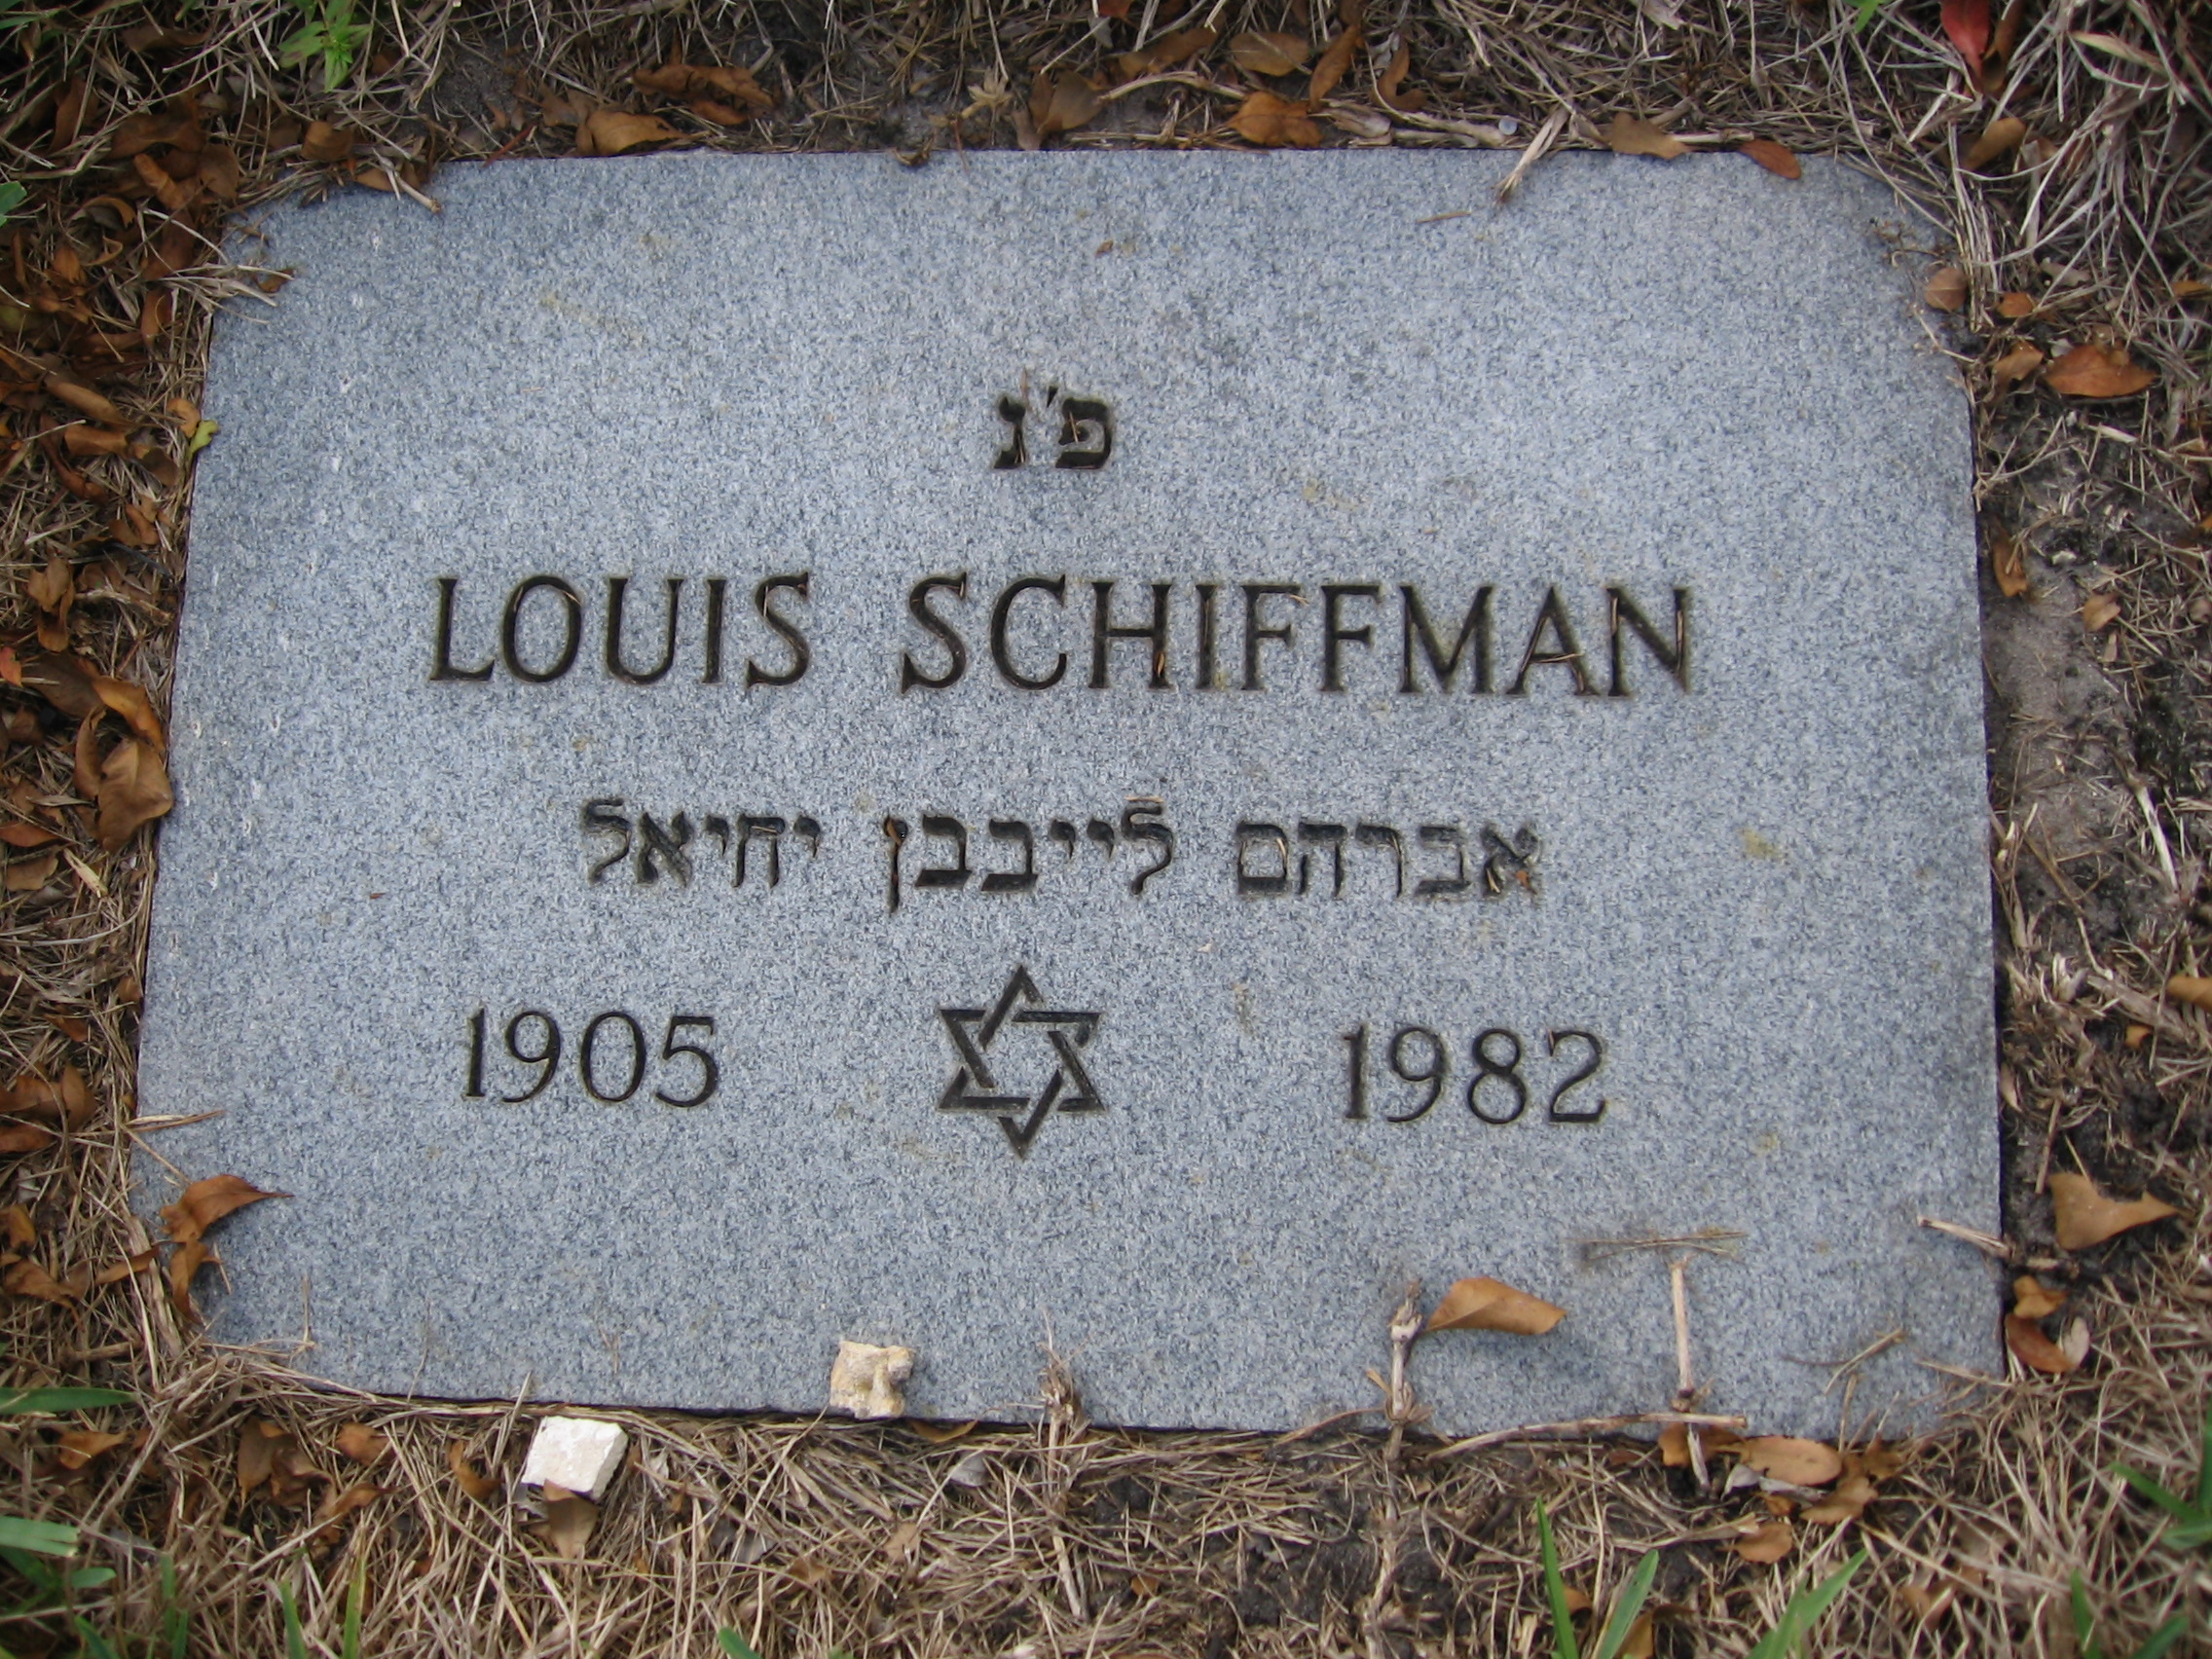 Louis Schiffman